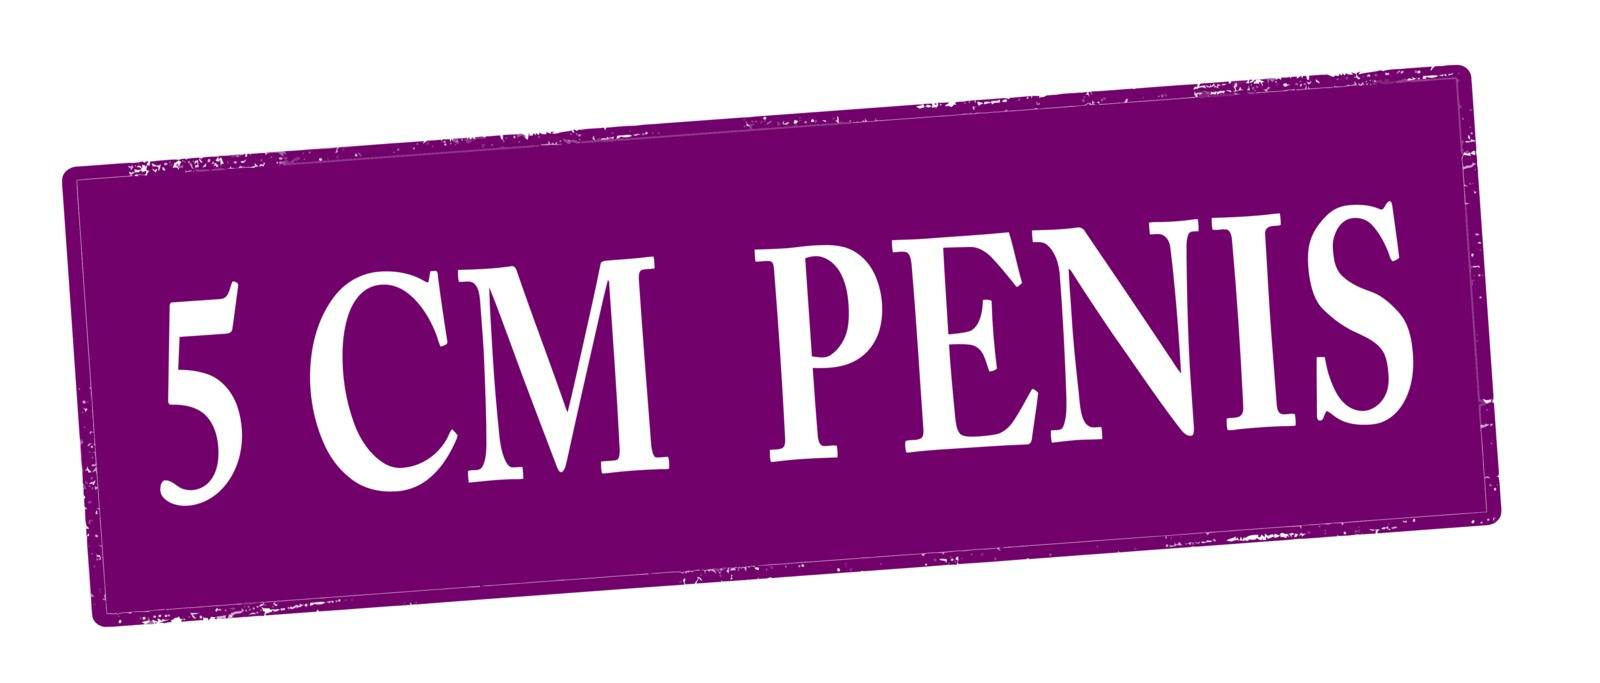 Five centimeter penis by carmenbobo